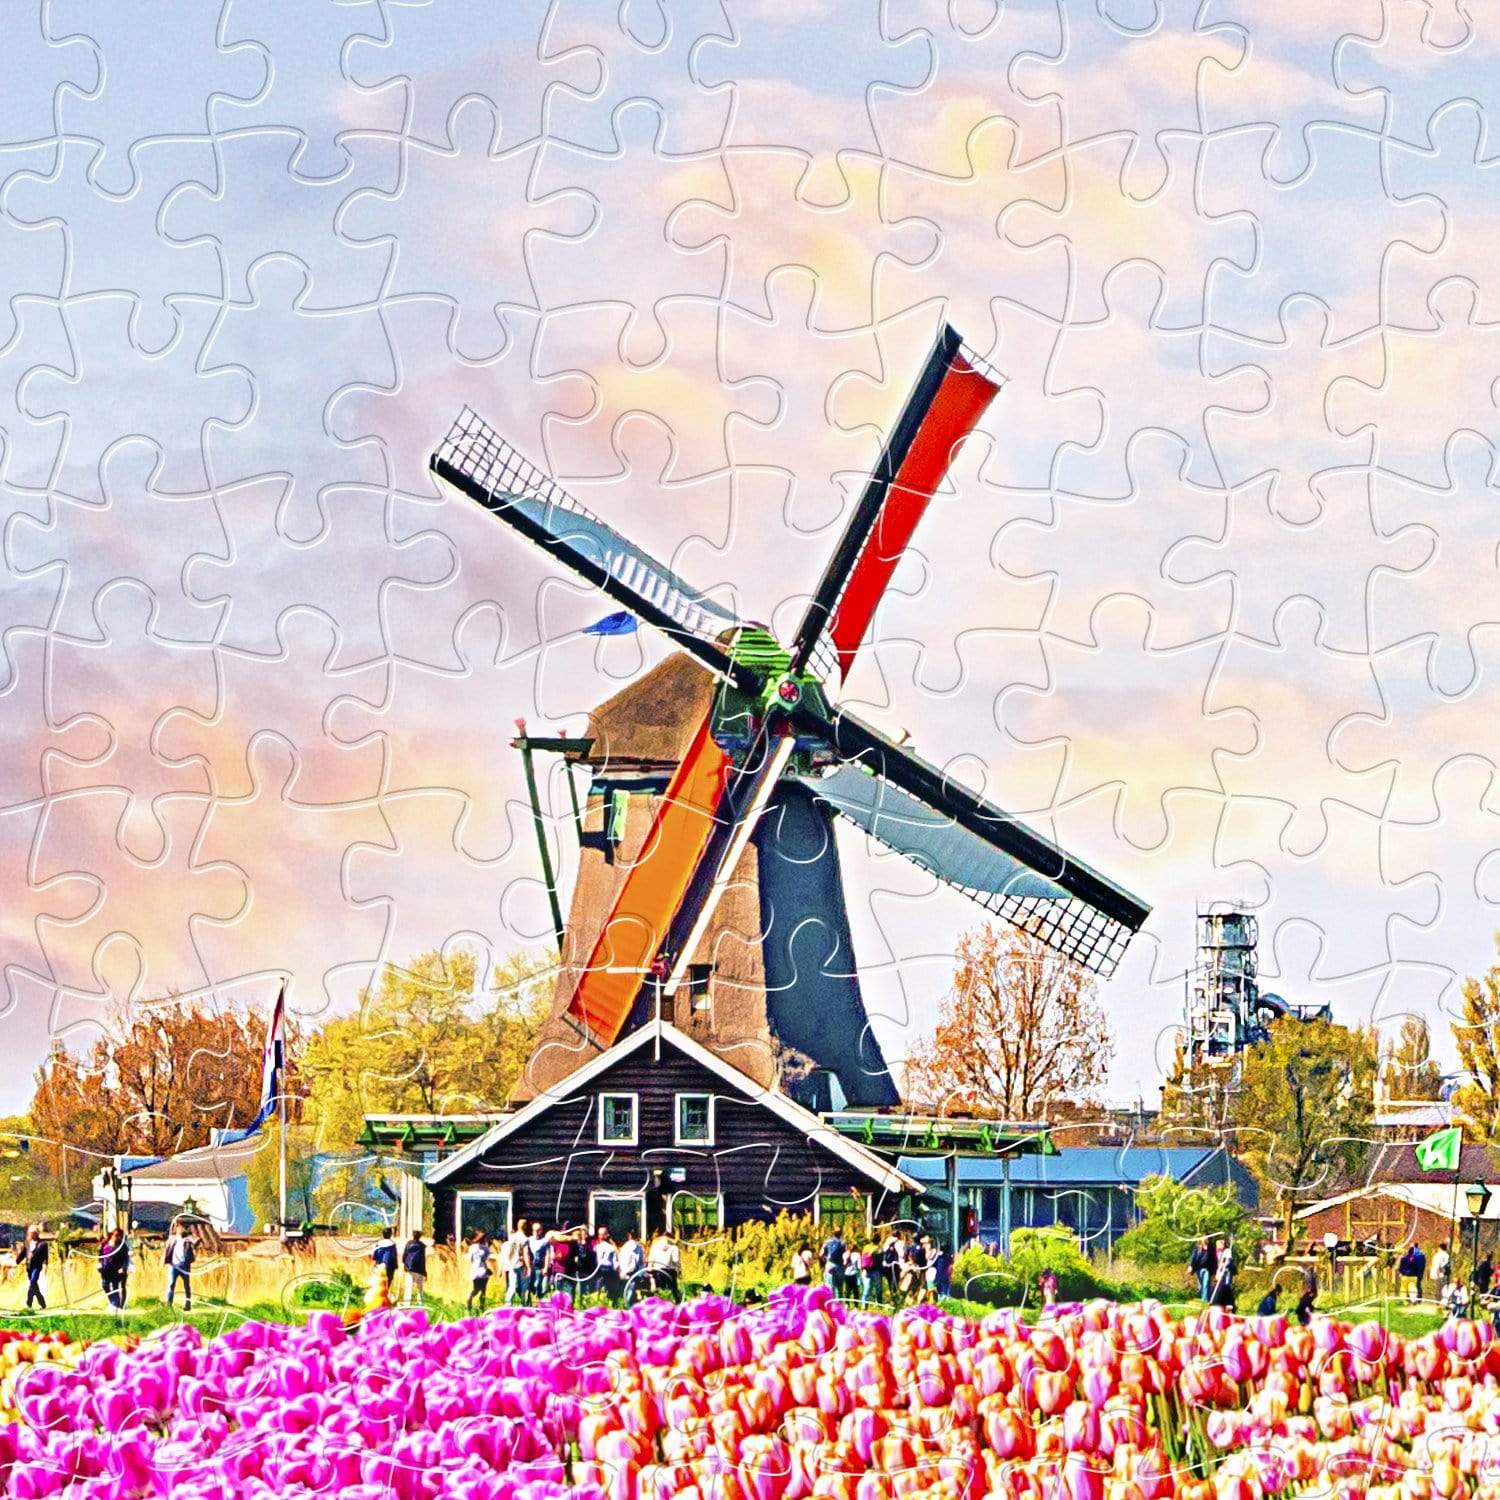 Zaanse Schans, Netherlands - 1000 Piece Jigsaw Puzzle